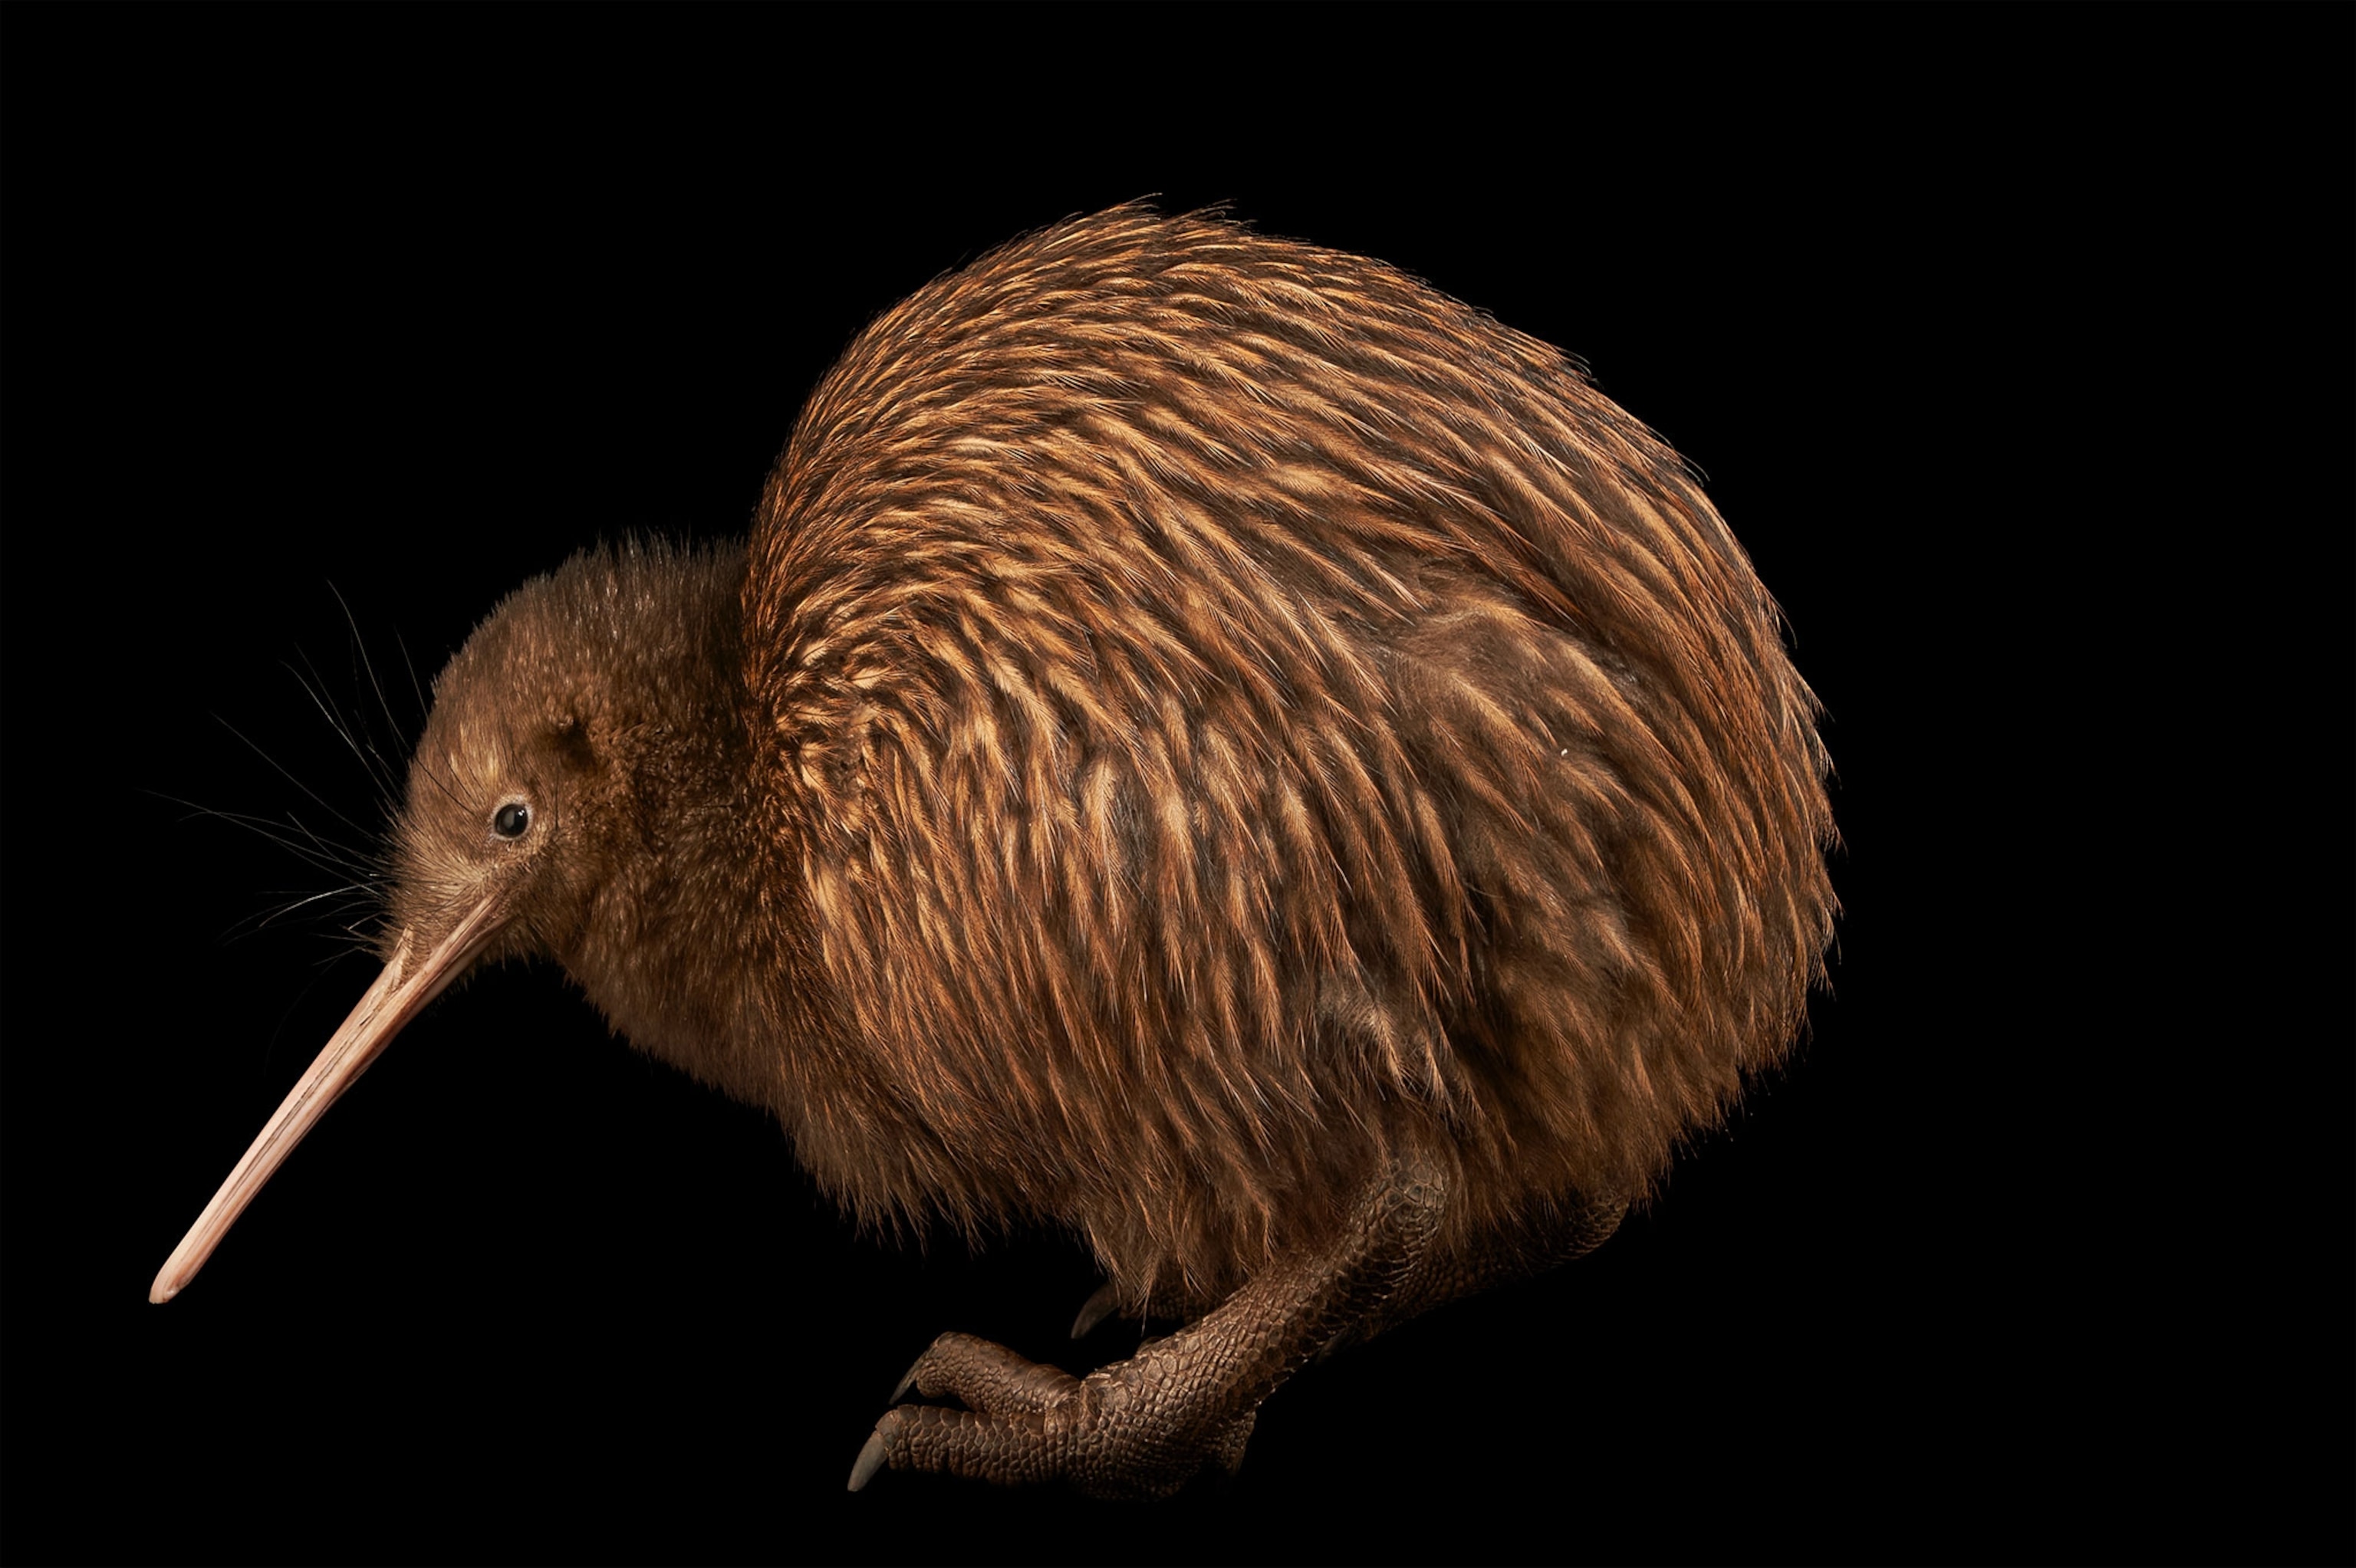 Detail Images Of A Kiwi Bird Nomer 14